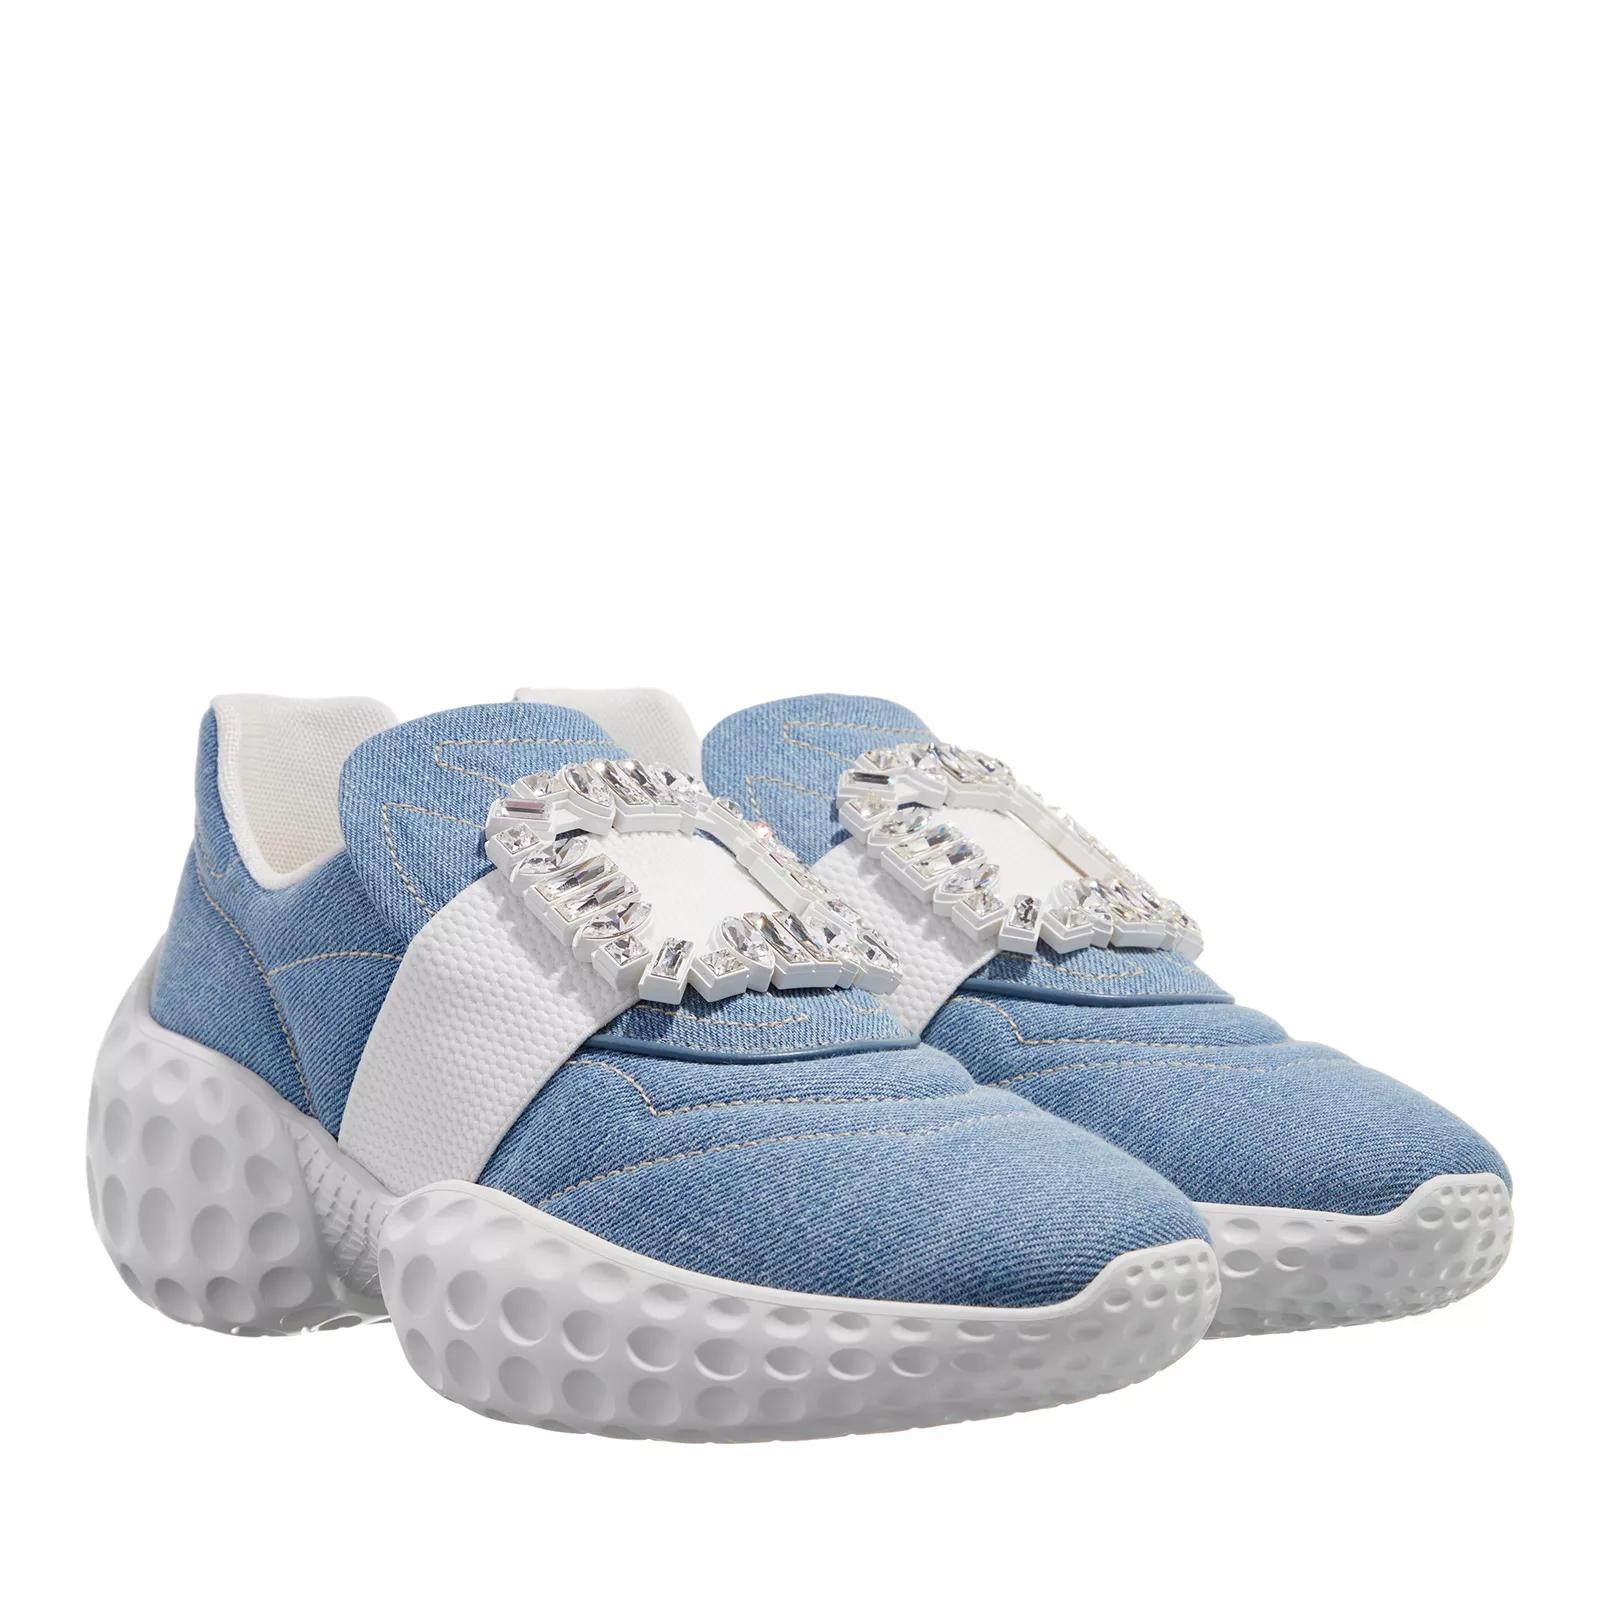 Roger Vivier Sneakers - Viv Run Platform Rubber Sole Casual Style - Gr. 38 (EU) - in Blau - für Damen von Roger Vivier